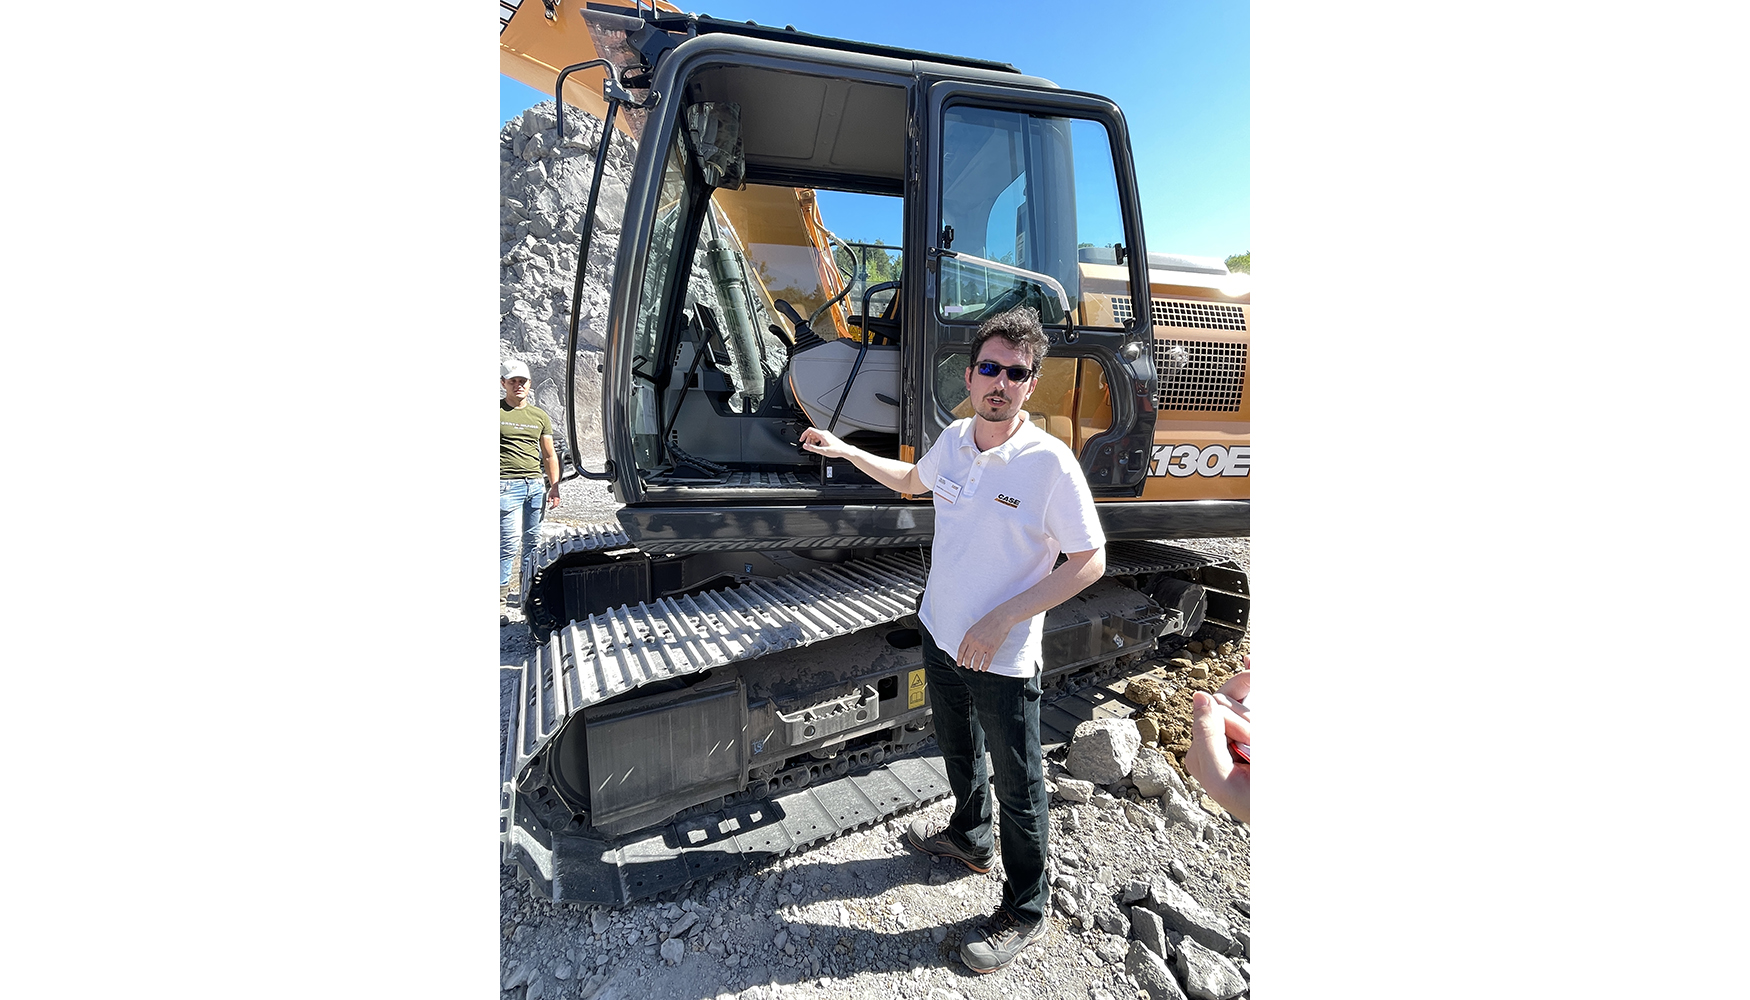 Massimiliano Ventura, product manager de Case Construction Equipment, junto a la nueva excavadora CX130E